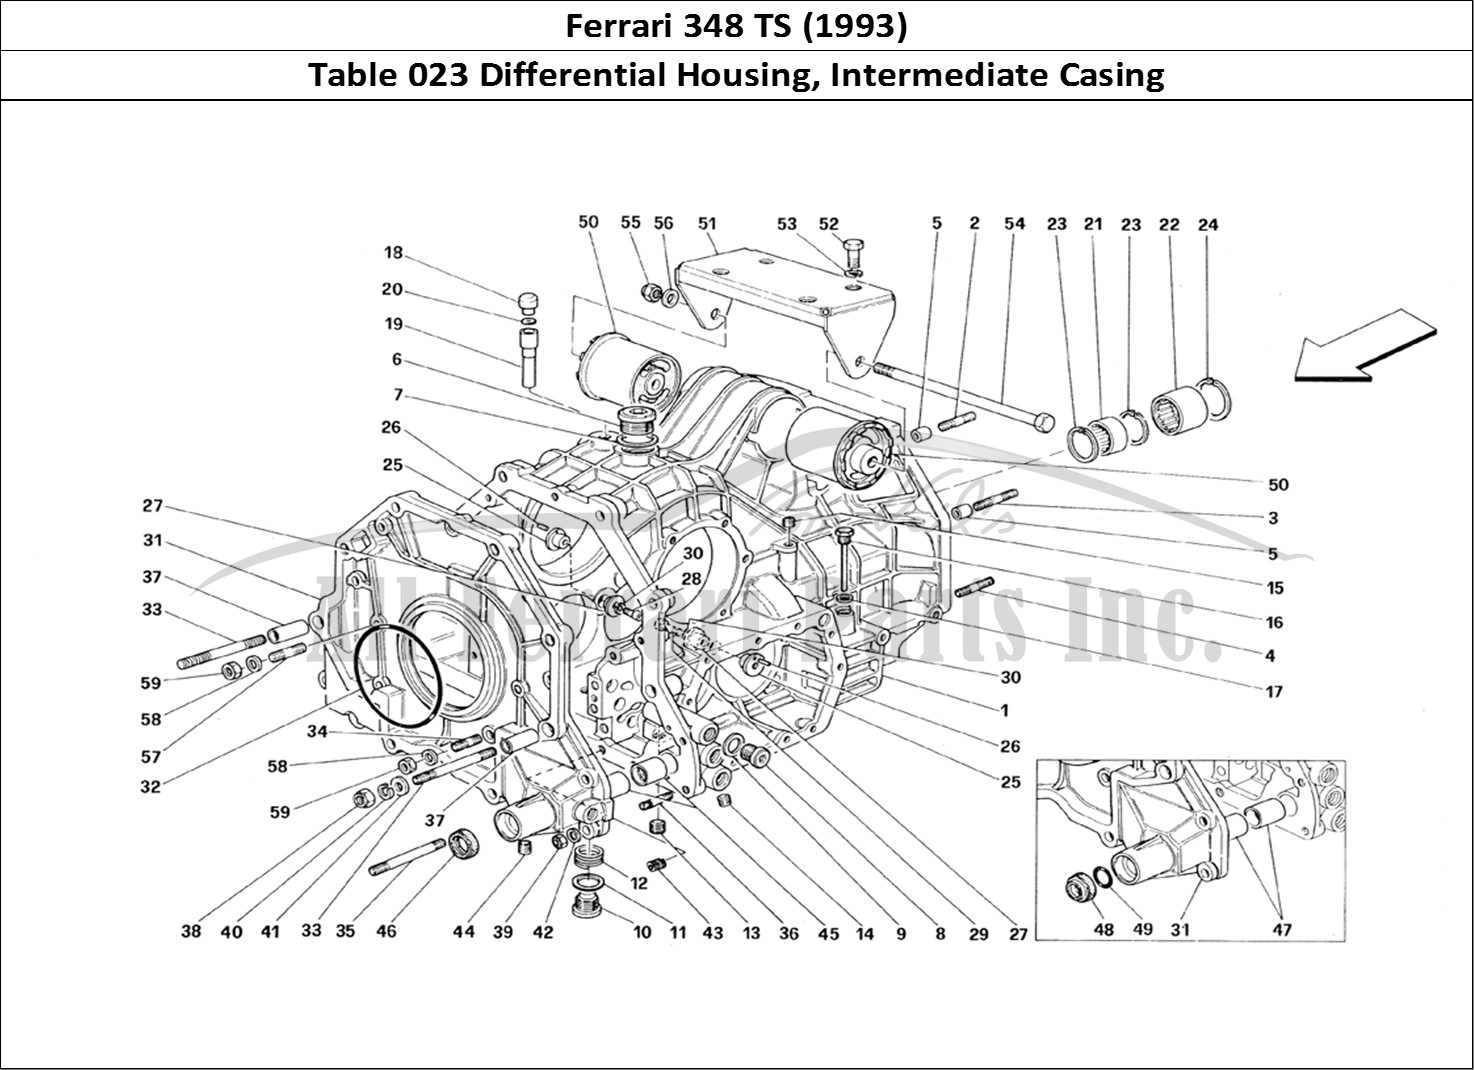 Ferrari Parts Ferrari 348 TB (1993) Page 023 Gearbox - Differential Ho